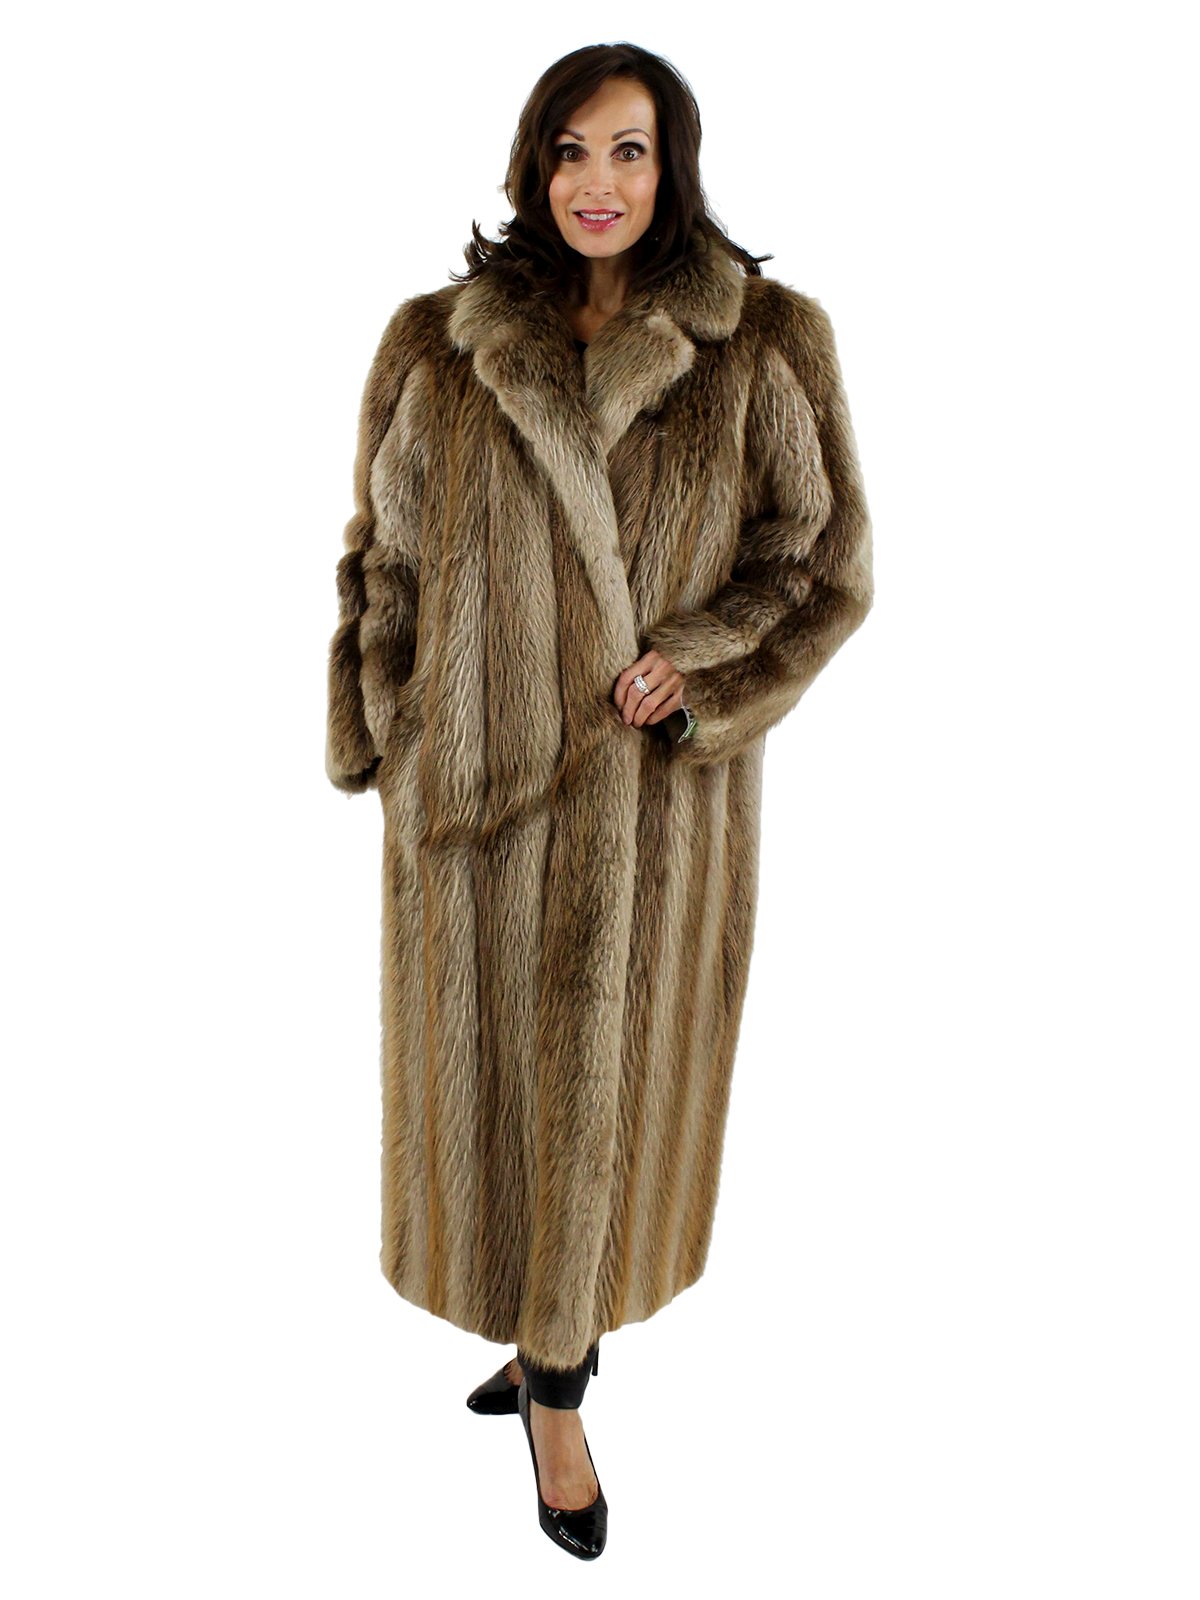 Blond Long Hair Beaver Fur Coat - Women's Large | Estate Furs